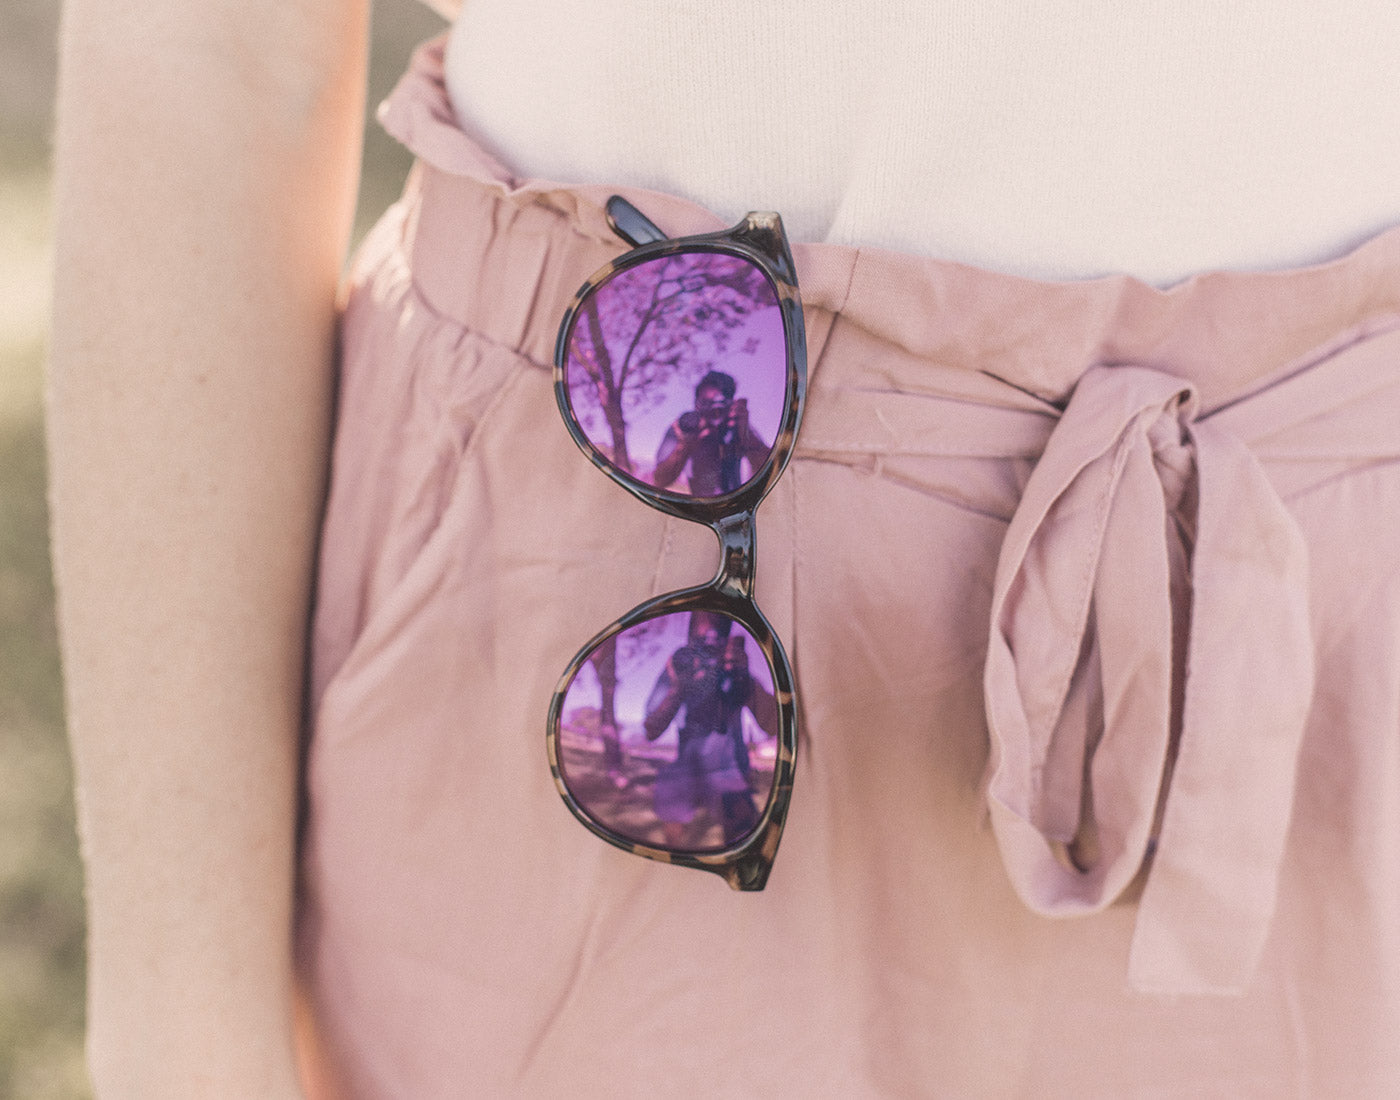 sunski makani sunglasses hanging on shorts waistband